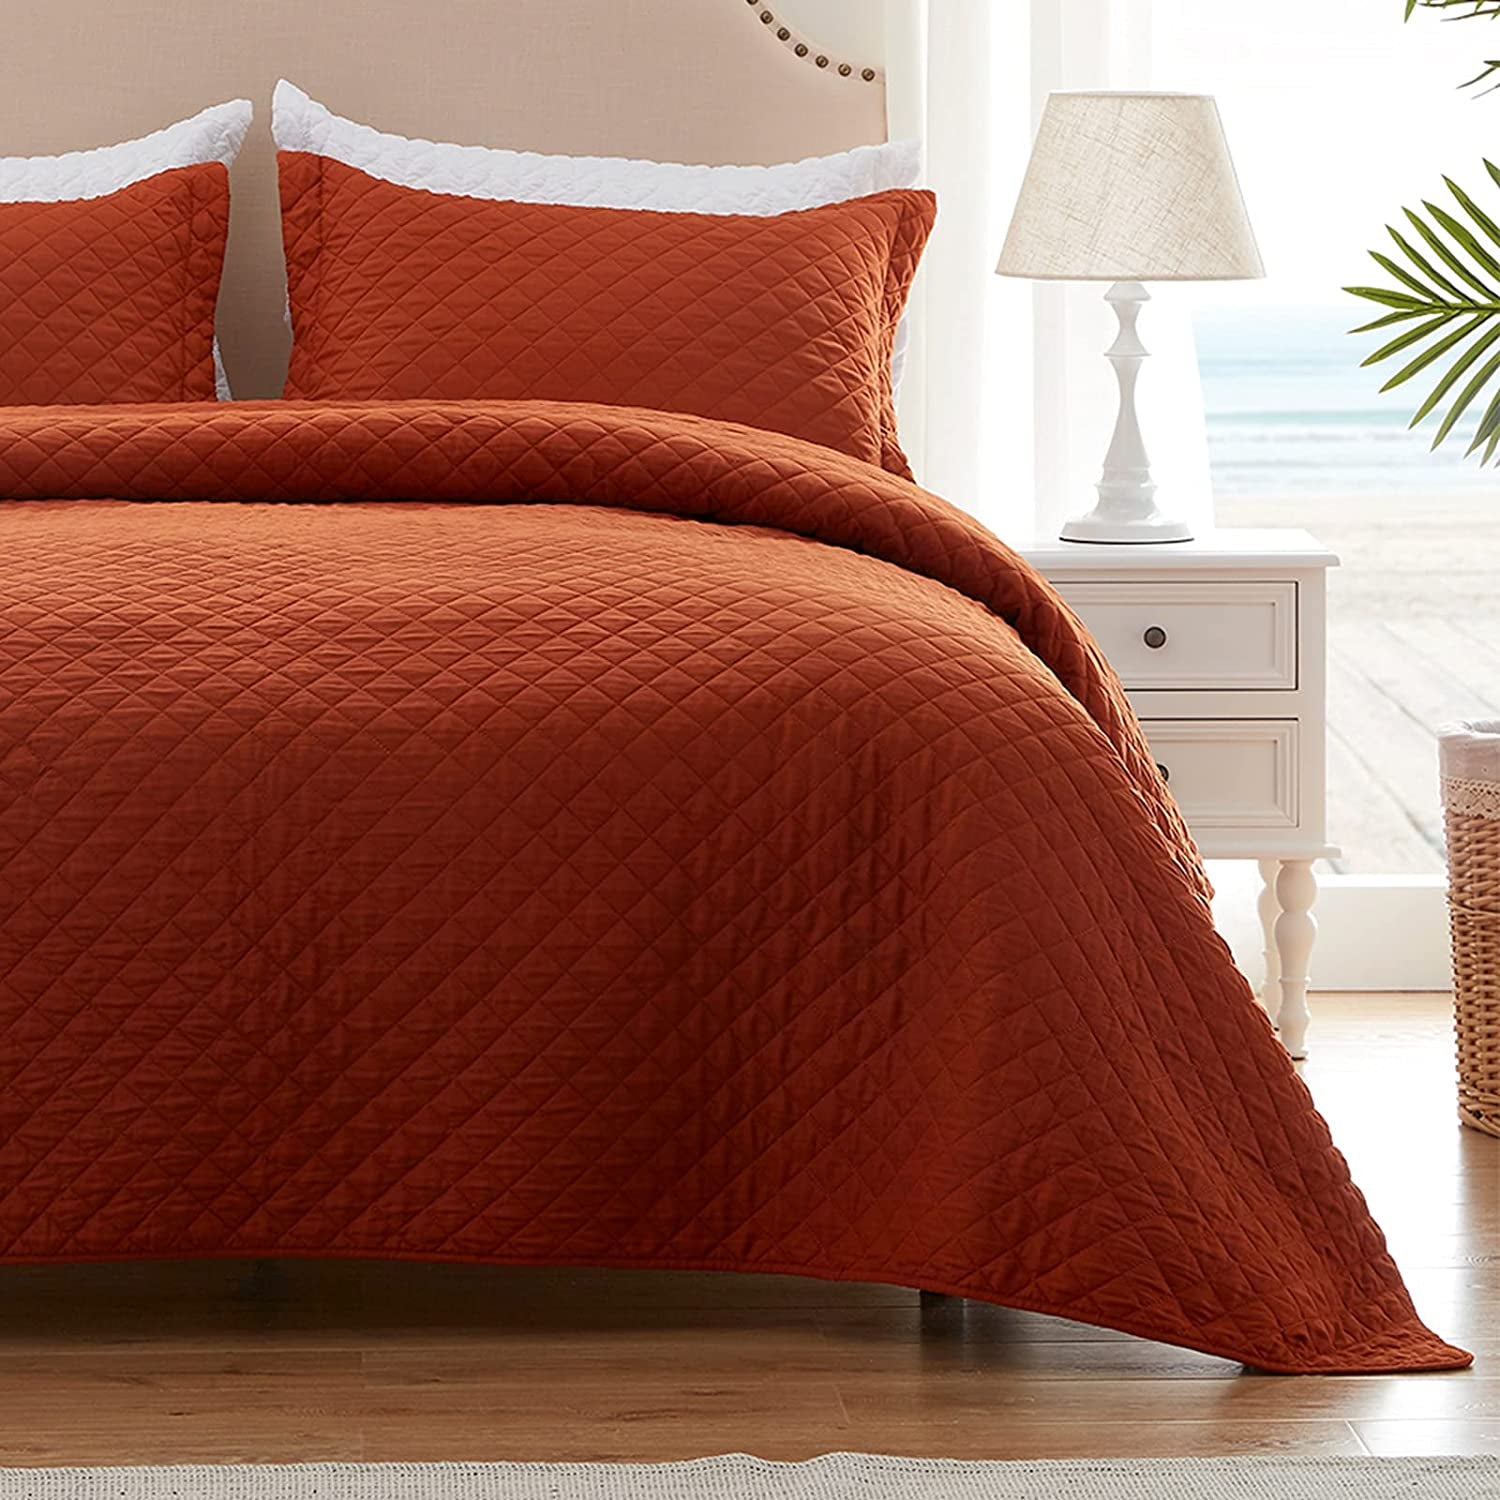 Quilt Set King Rust Lightweight Bedspread Soft Reversible Coverlet for All Season 3Pcs Burnt Orange Diamond Quilted Bedding Sets (1 Quilt 2 Pillow Shams)(106"X96")